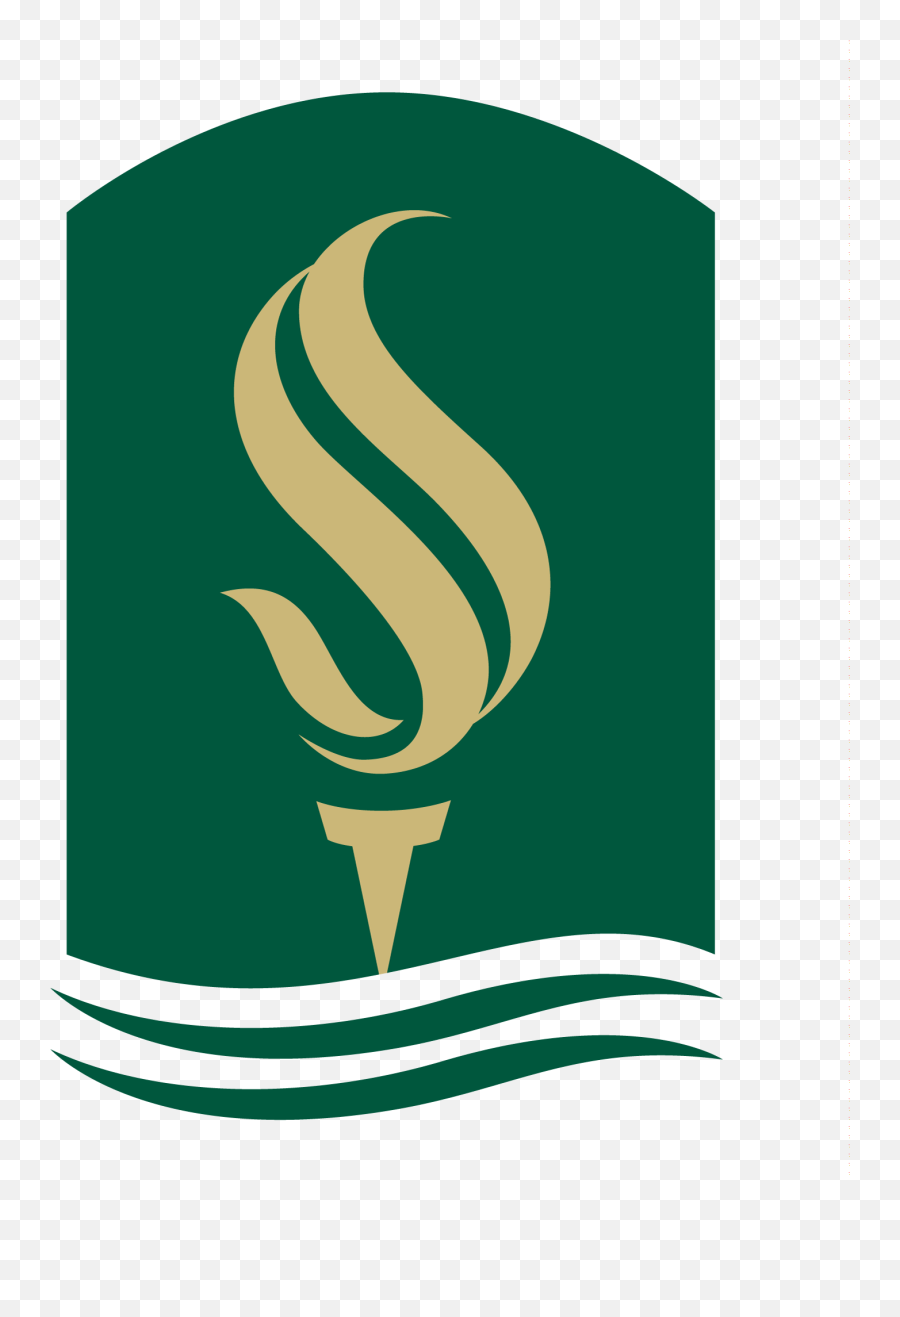 Authentic Leadership College - Sac State Logo White Emoji,Sac State Logo